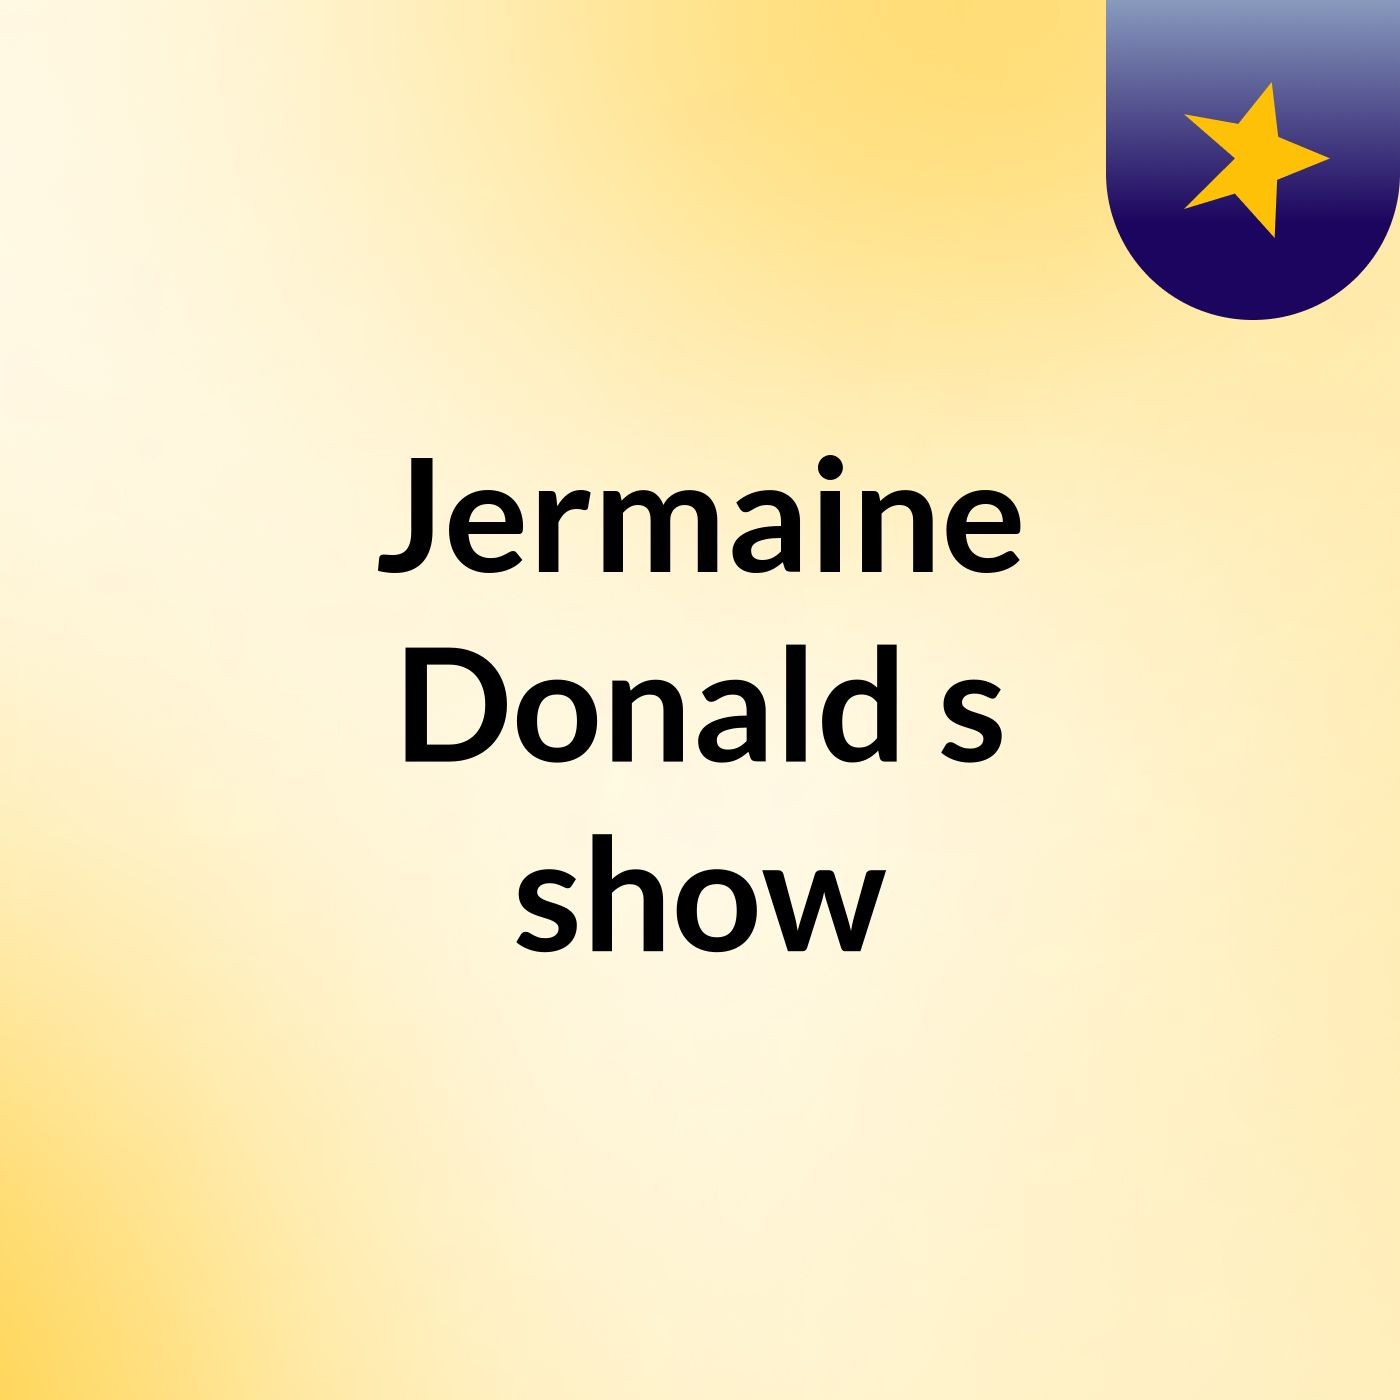 Episode 2 - Jermaine Donald's show